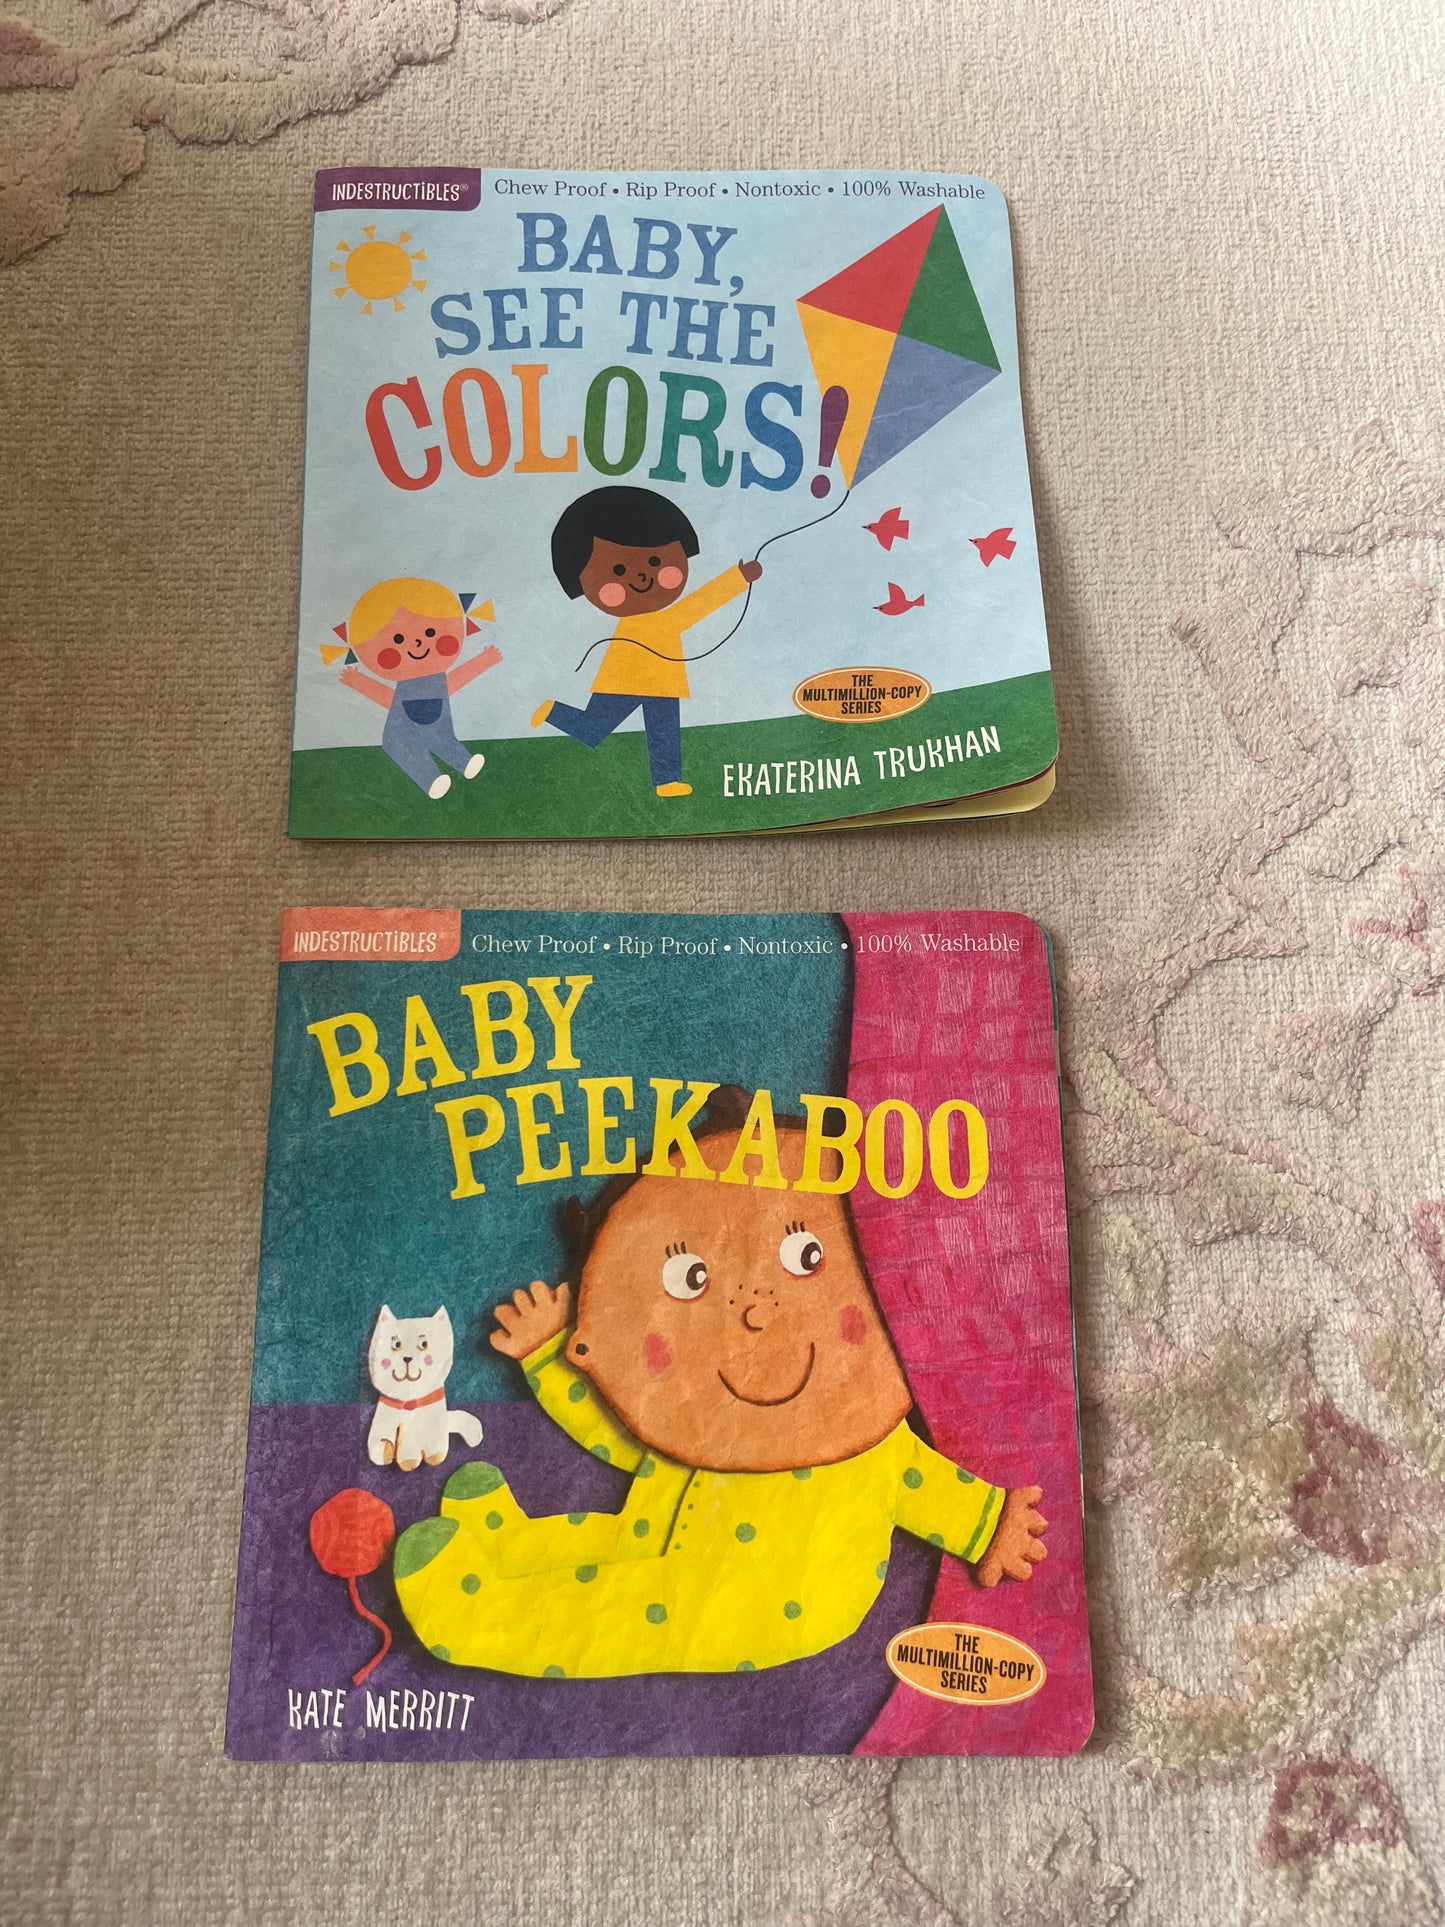 Indestructible Baby Books (2)